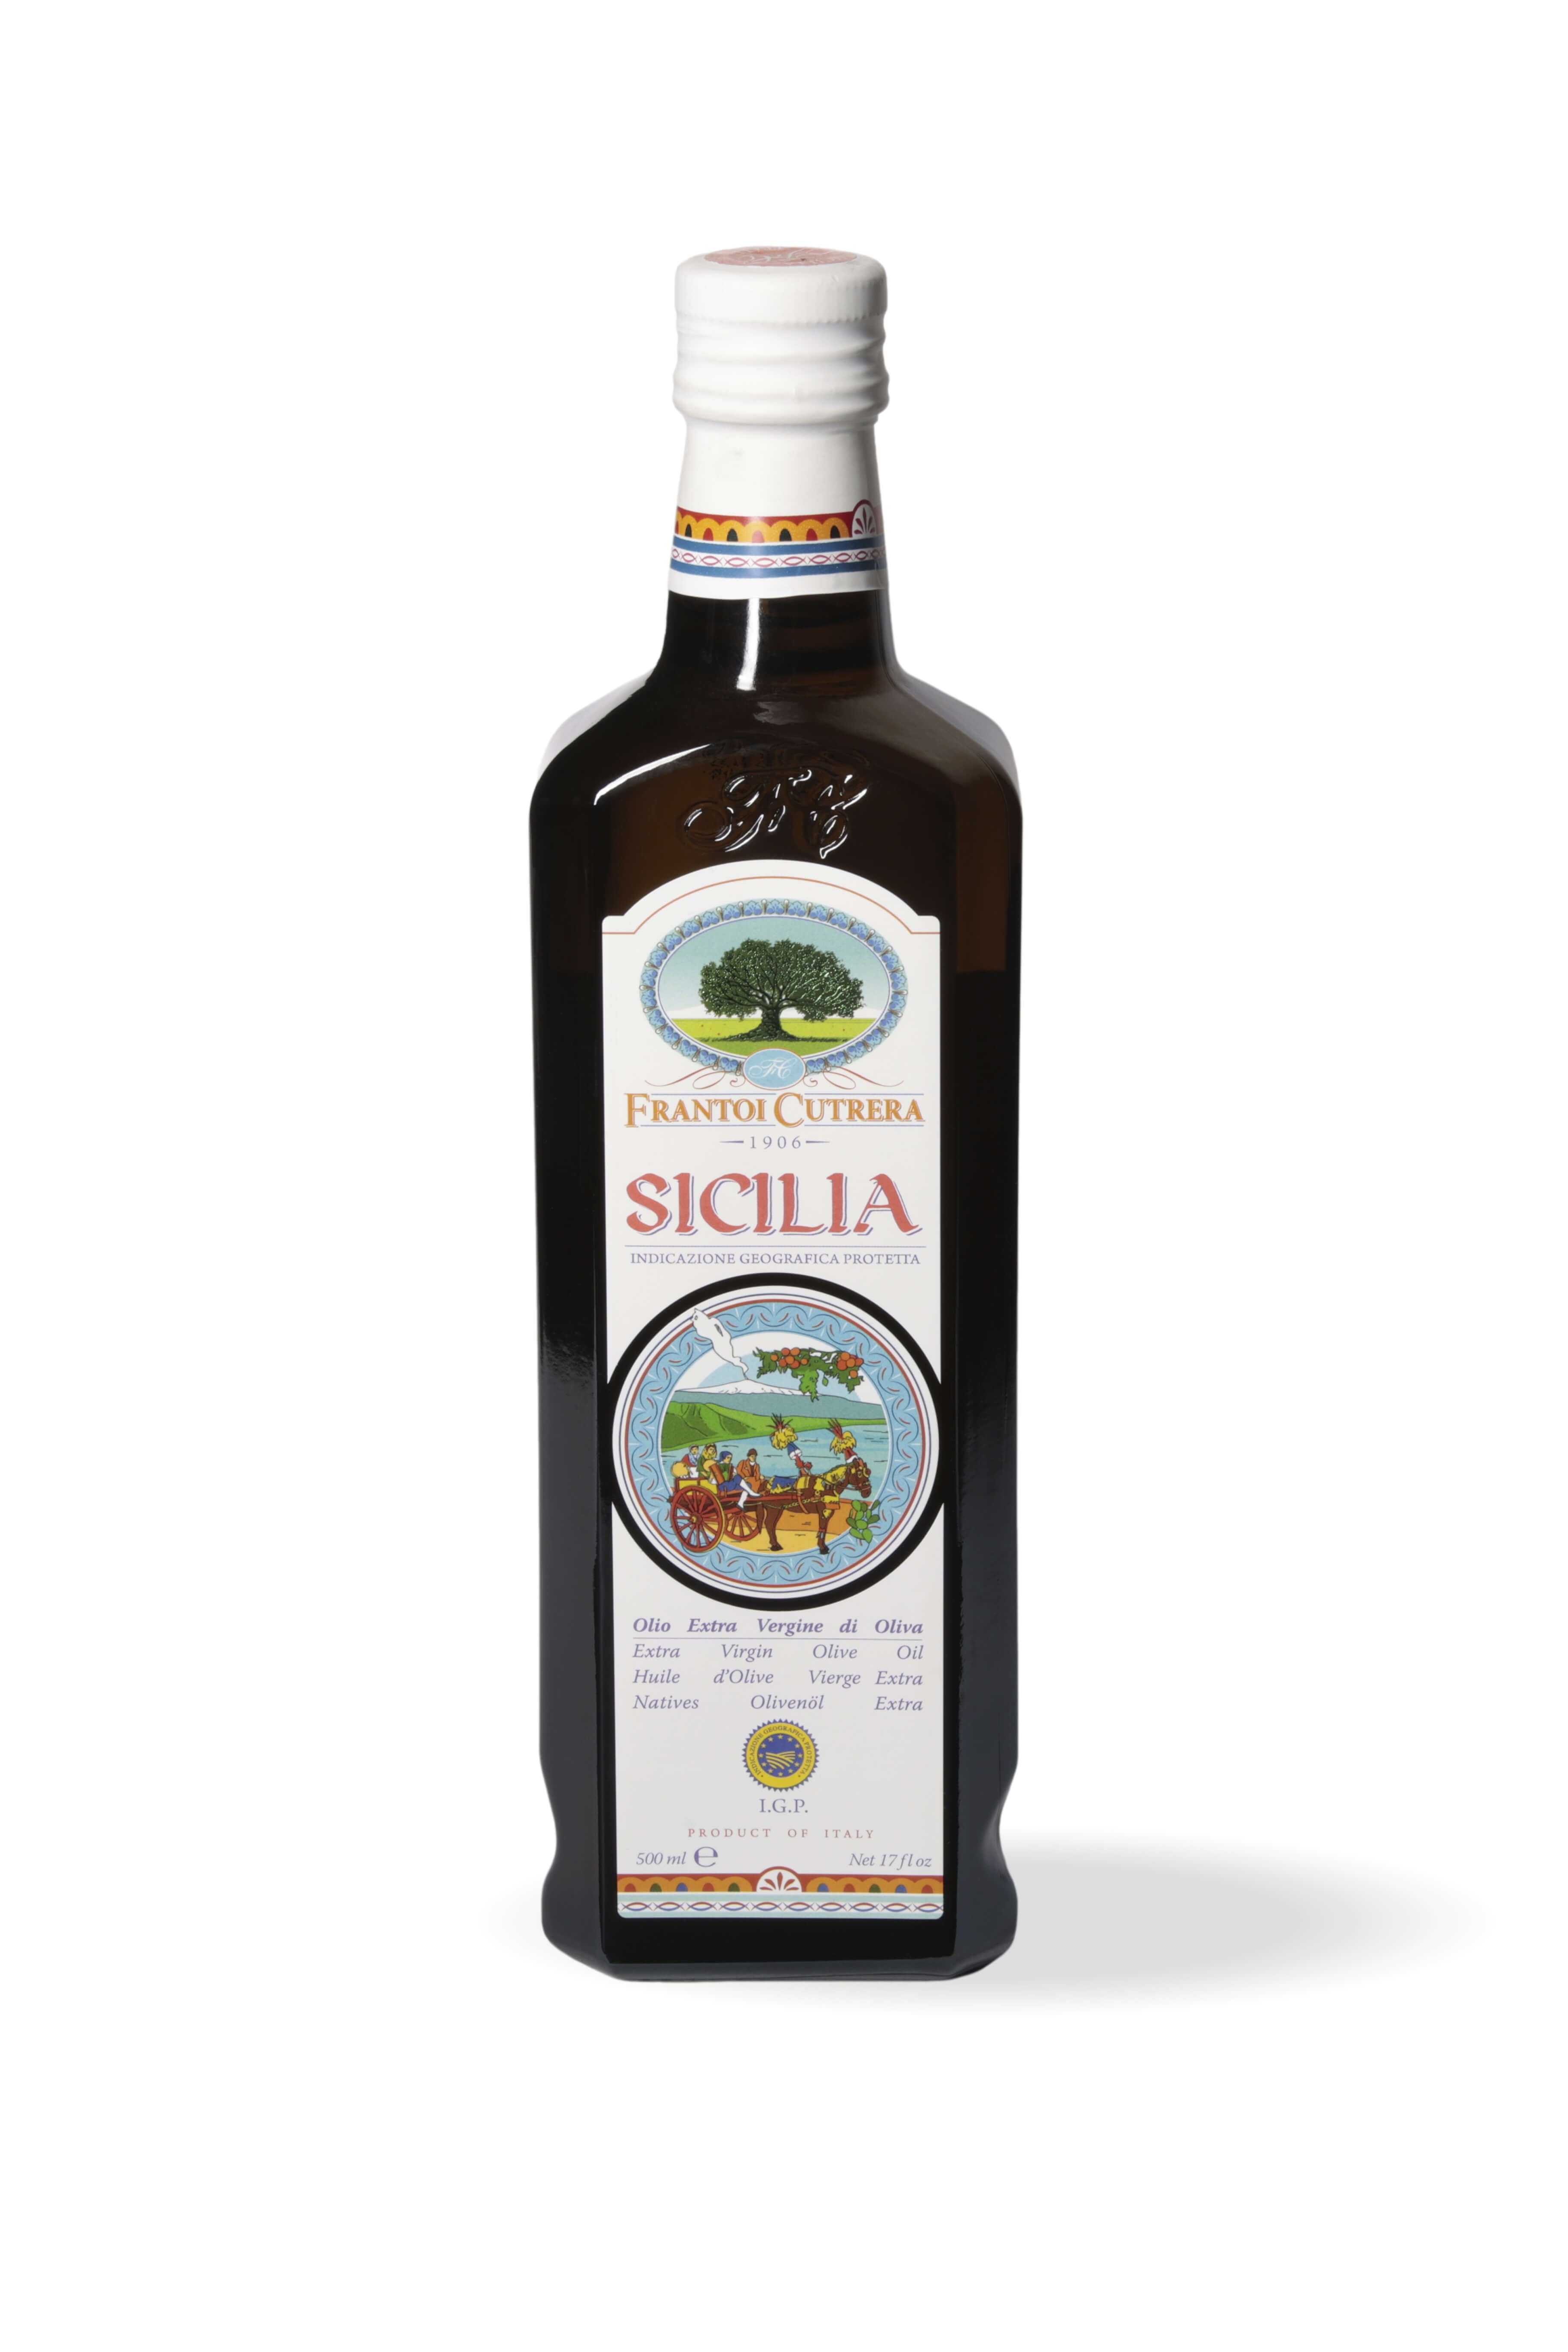 Cutrera IGP Sicily - Sicilian Extra Virgin Olive Oil - 6 Bottles Box